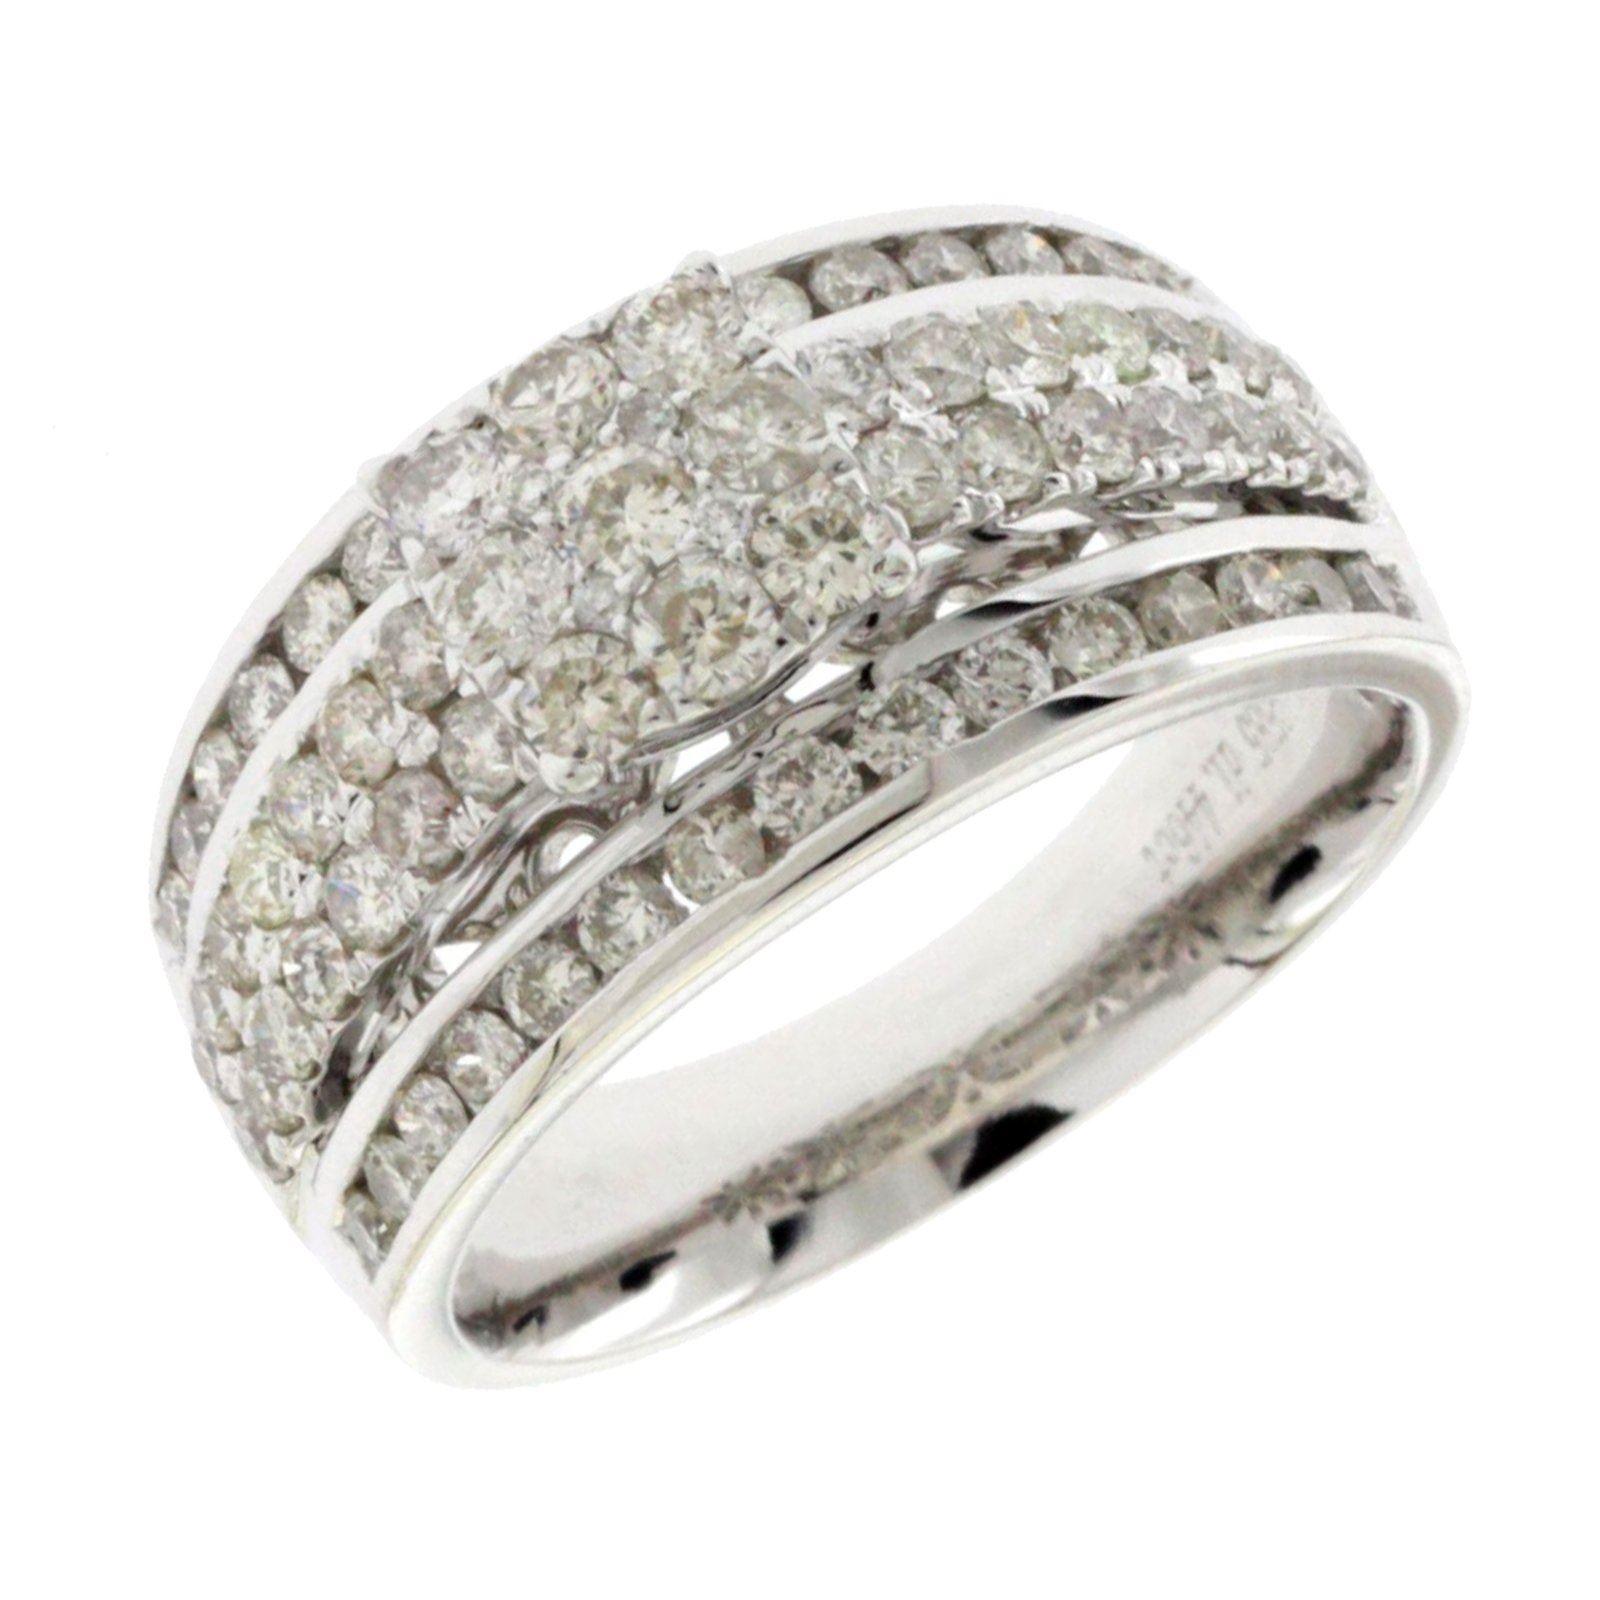 1.44 Carat Natural Diamonds G Si1 in 14 Karat White Gold Engagement Ring For Sale